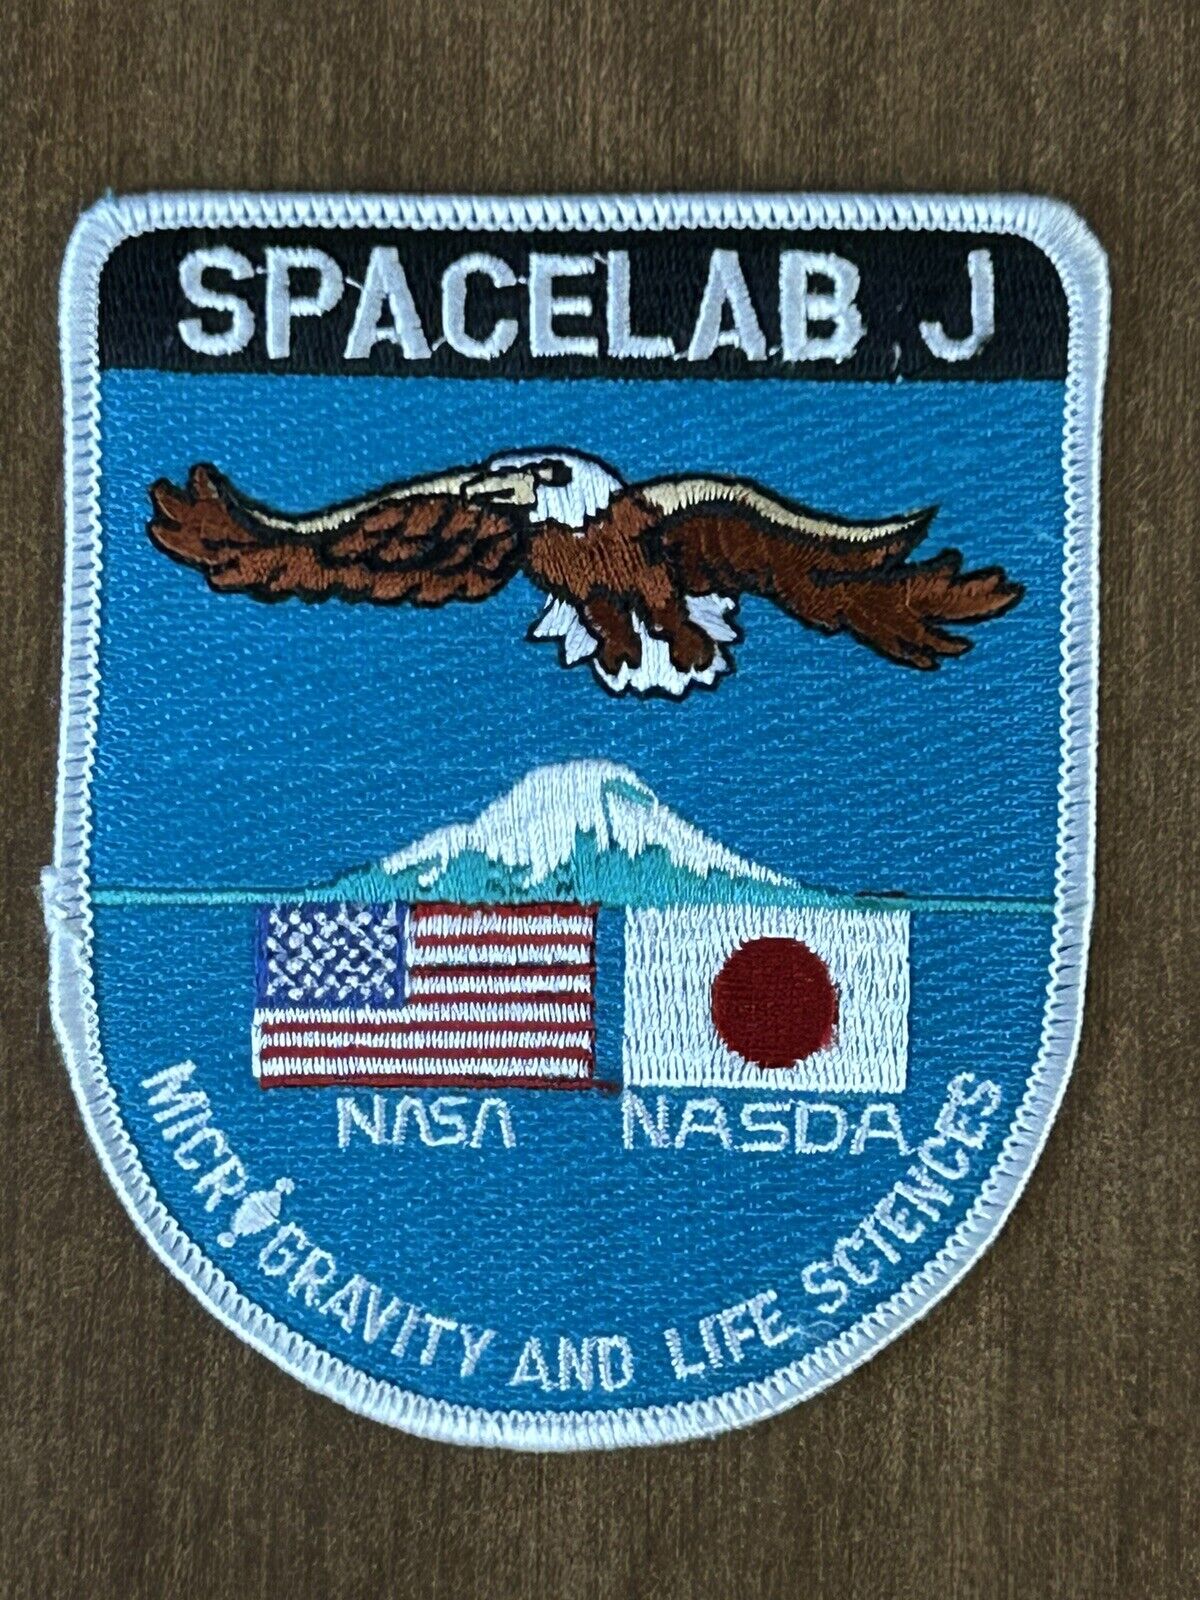 NASA NASDA Spacelab J Microgravity & Life Sciences STS-47 Space Shuttle Mission